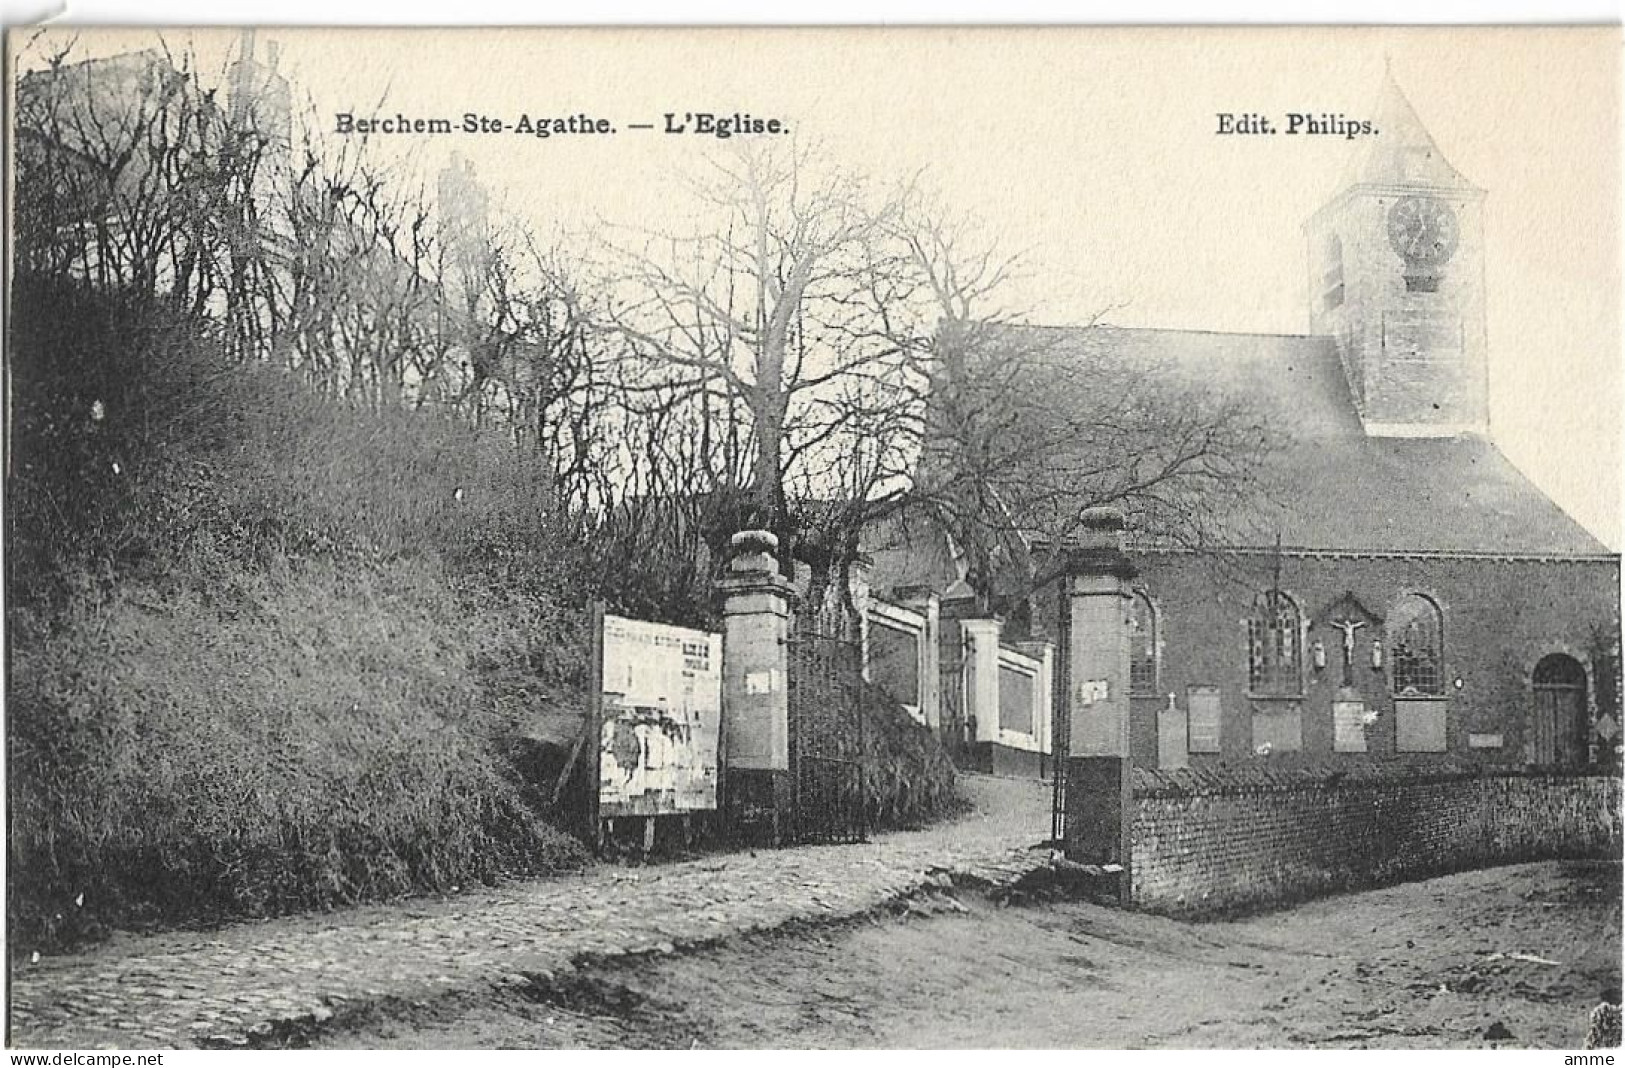 Sint-Agatha-Berchem   *   L'Eglise - St-Agatha-Berchem - Berchem-Ste-Agathe